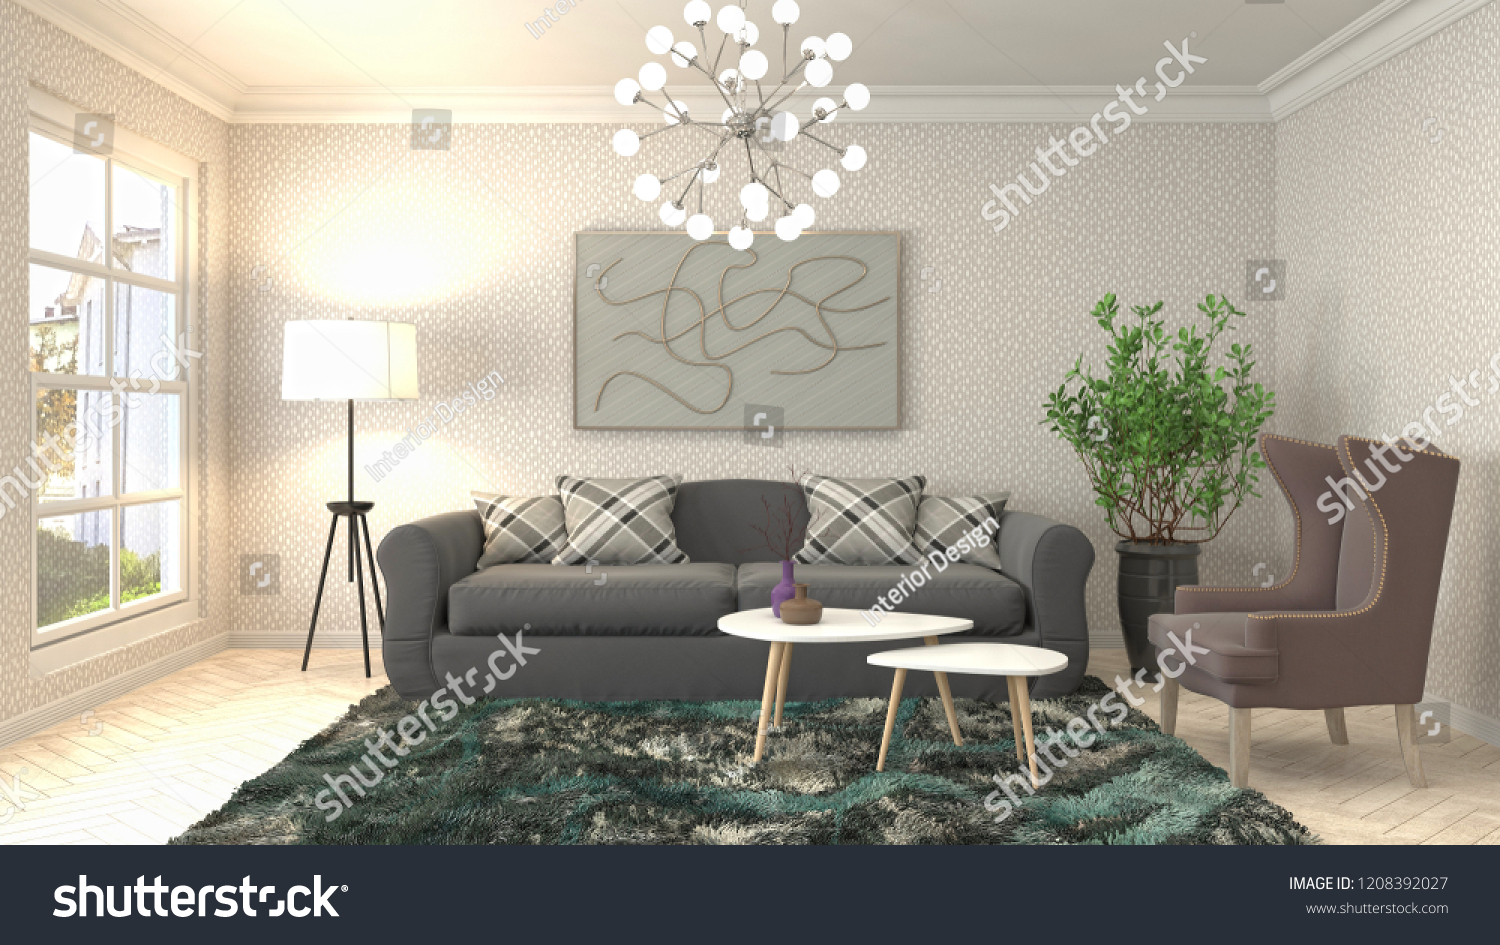 Interior of the living room. 3D illustration #1208392027